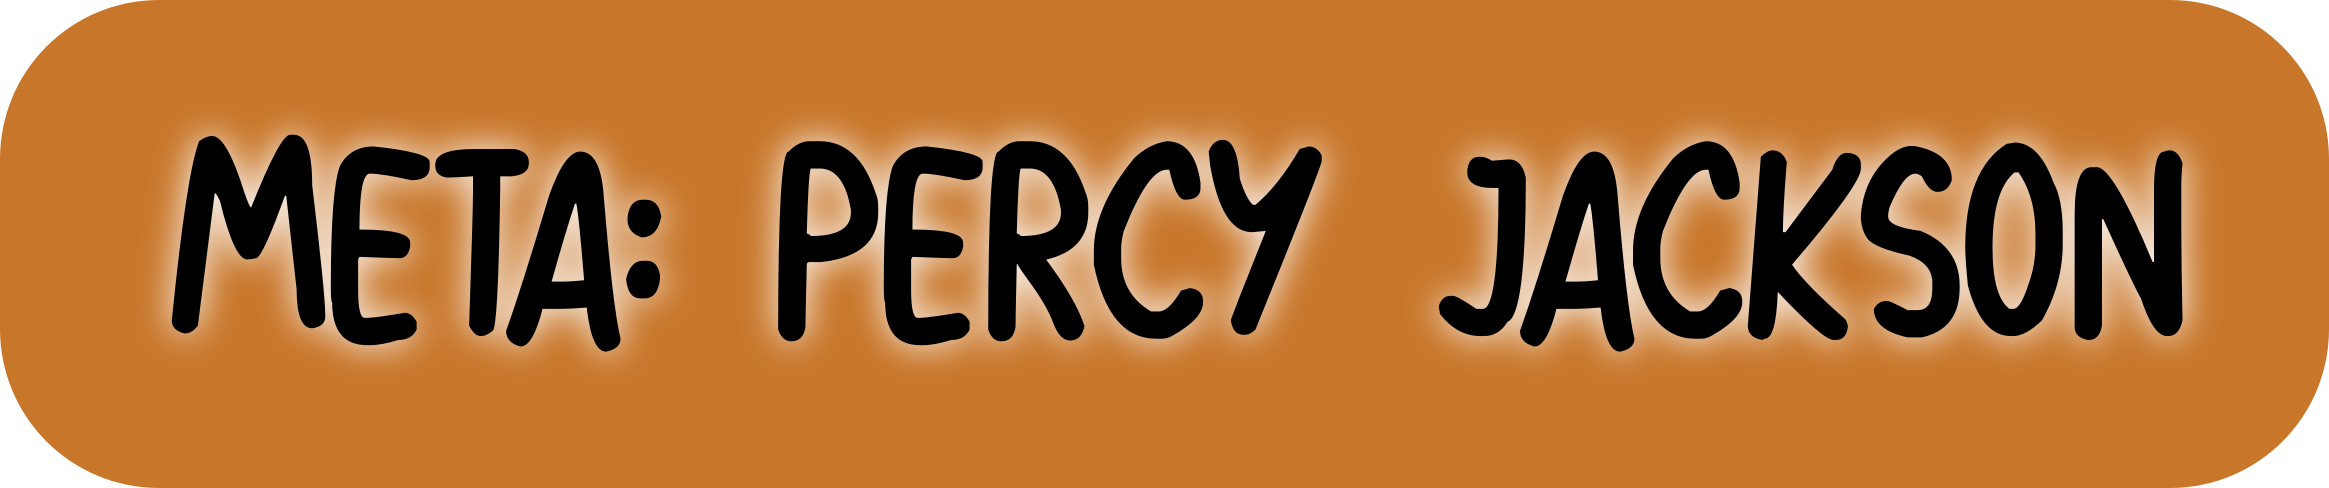 META: Percy Jackson